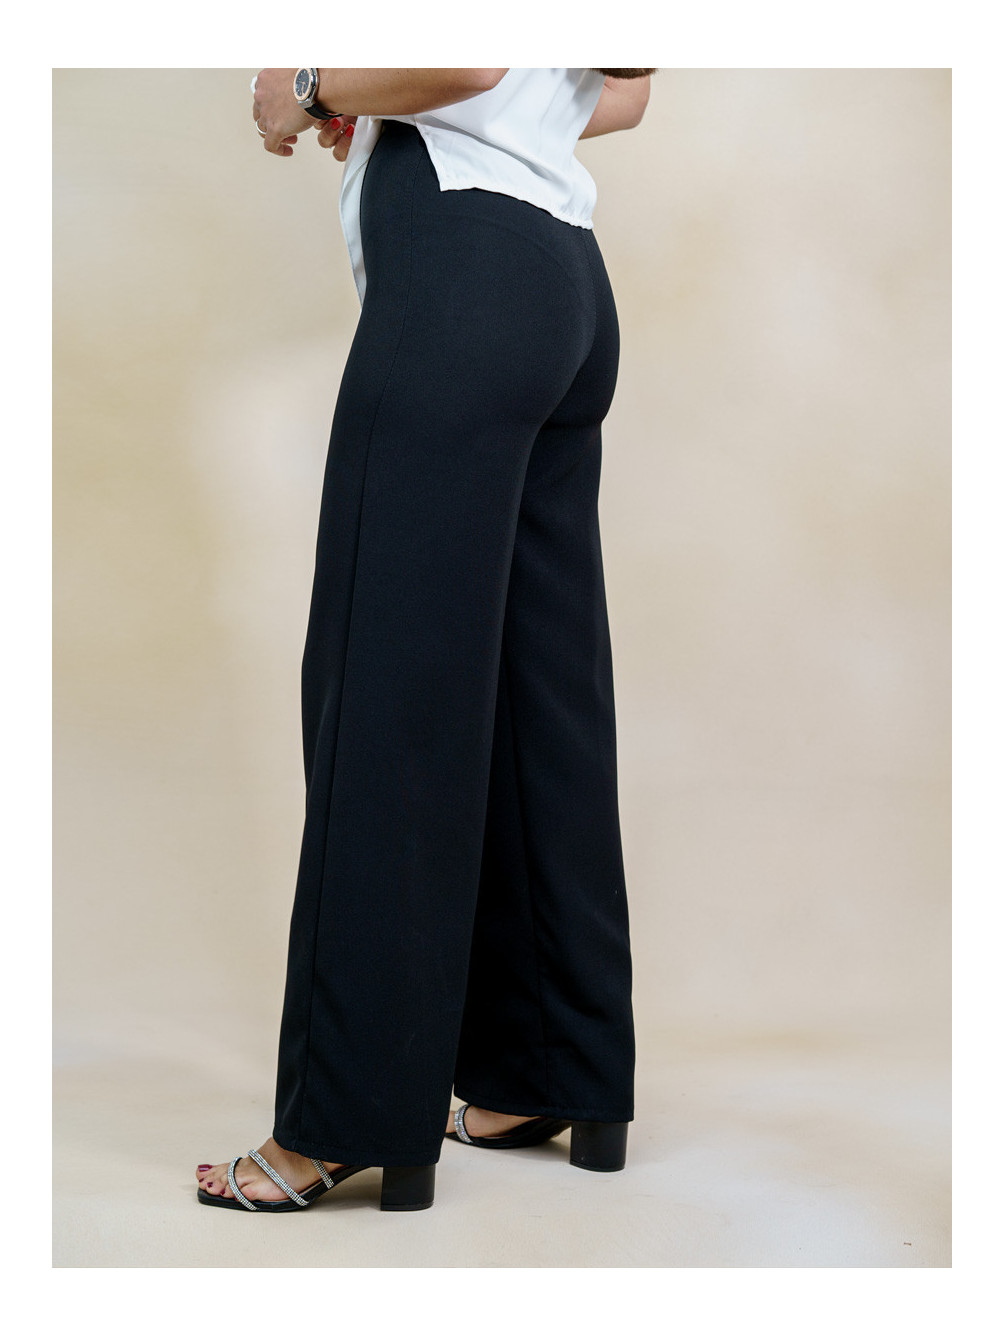 Paraíso Ambigüedad Dislocación Pantalón Recto Clásico | Pantalón Oficina Mujer | Mariquita Trasquilá